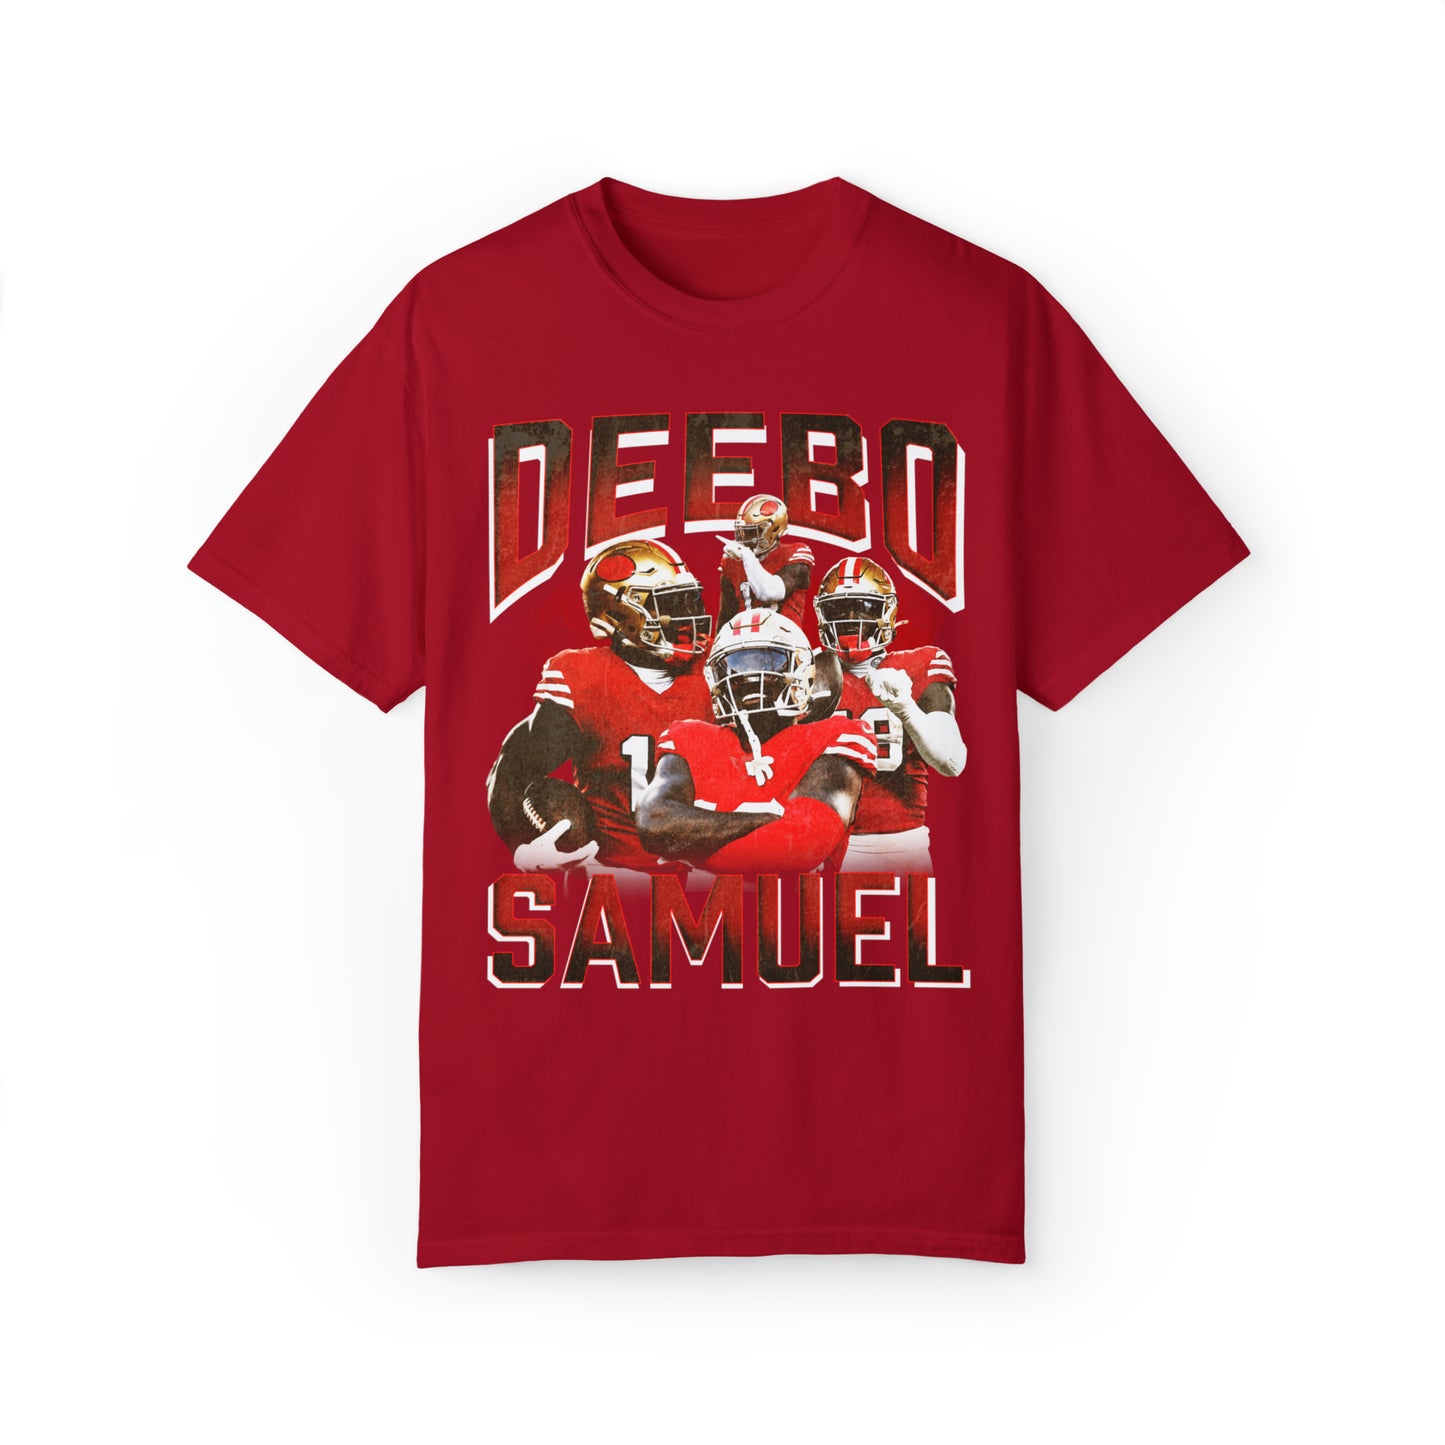 WIY x Samuel Vintage T-Shirt